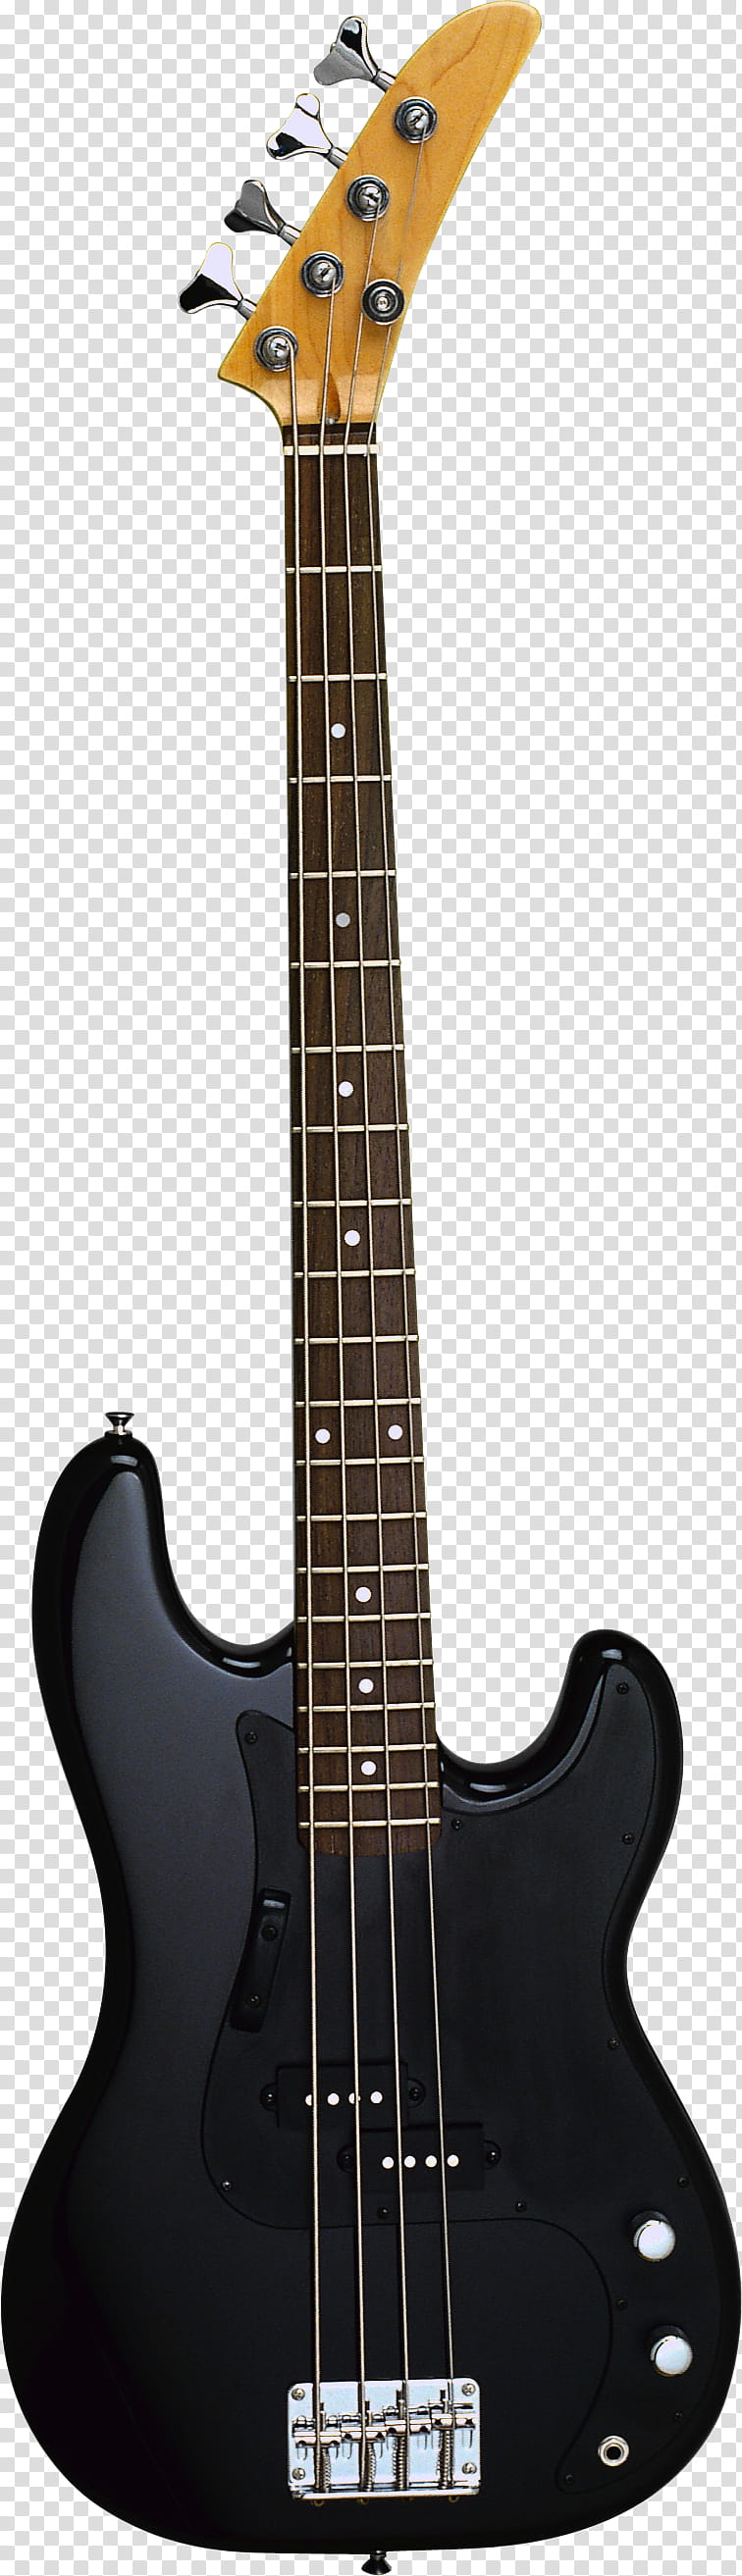 black electric bass guitar transparent background PNG clipart